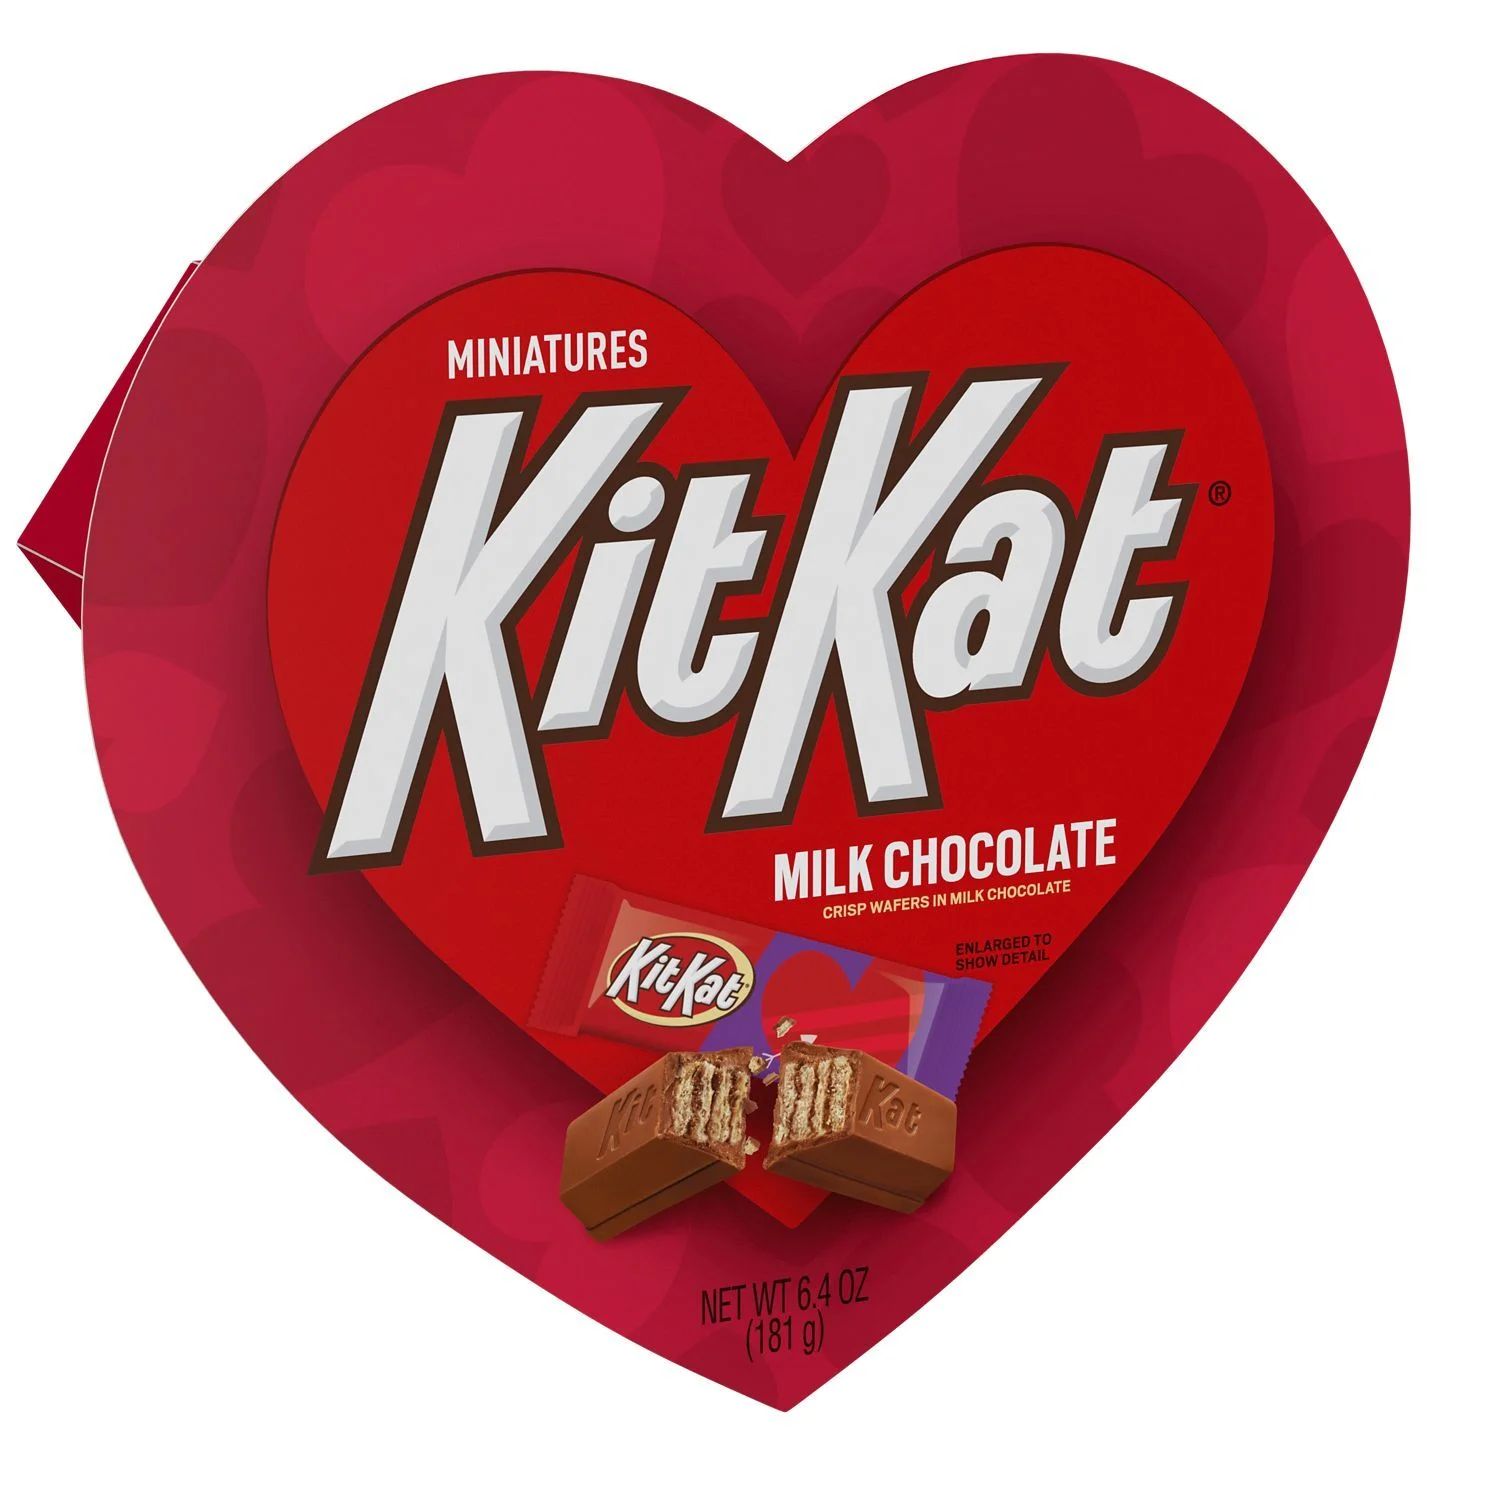 KIT KAT®, Miniatures Milk Chocolate Wafer Candy Bars, Valentine's Day, 6.4 oz, Heart Gift Box - ... | Walmart (US)